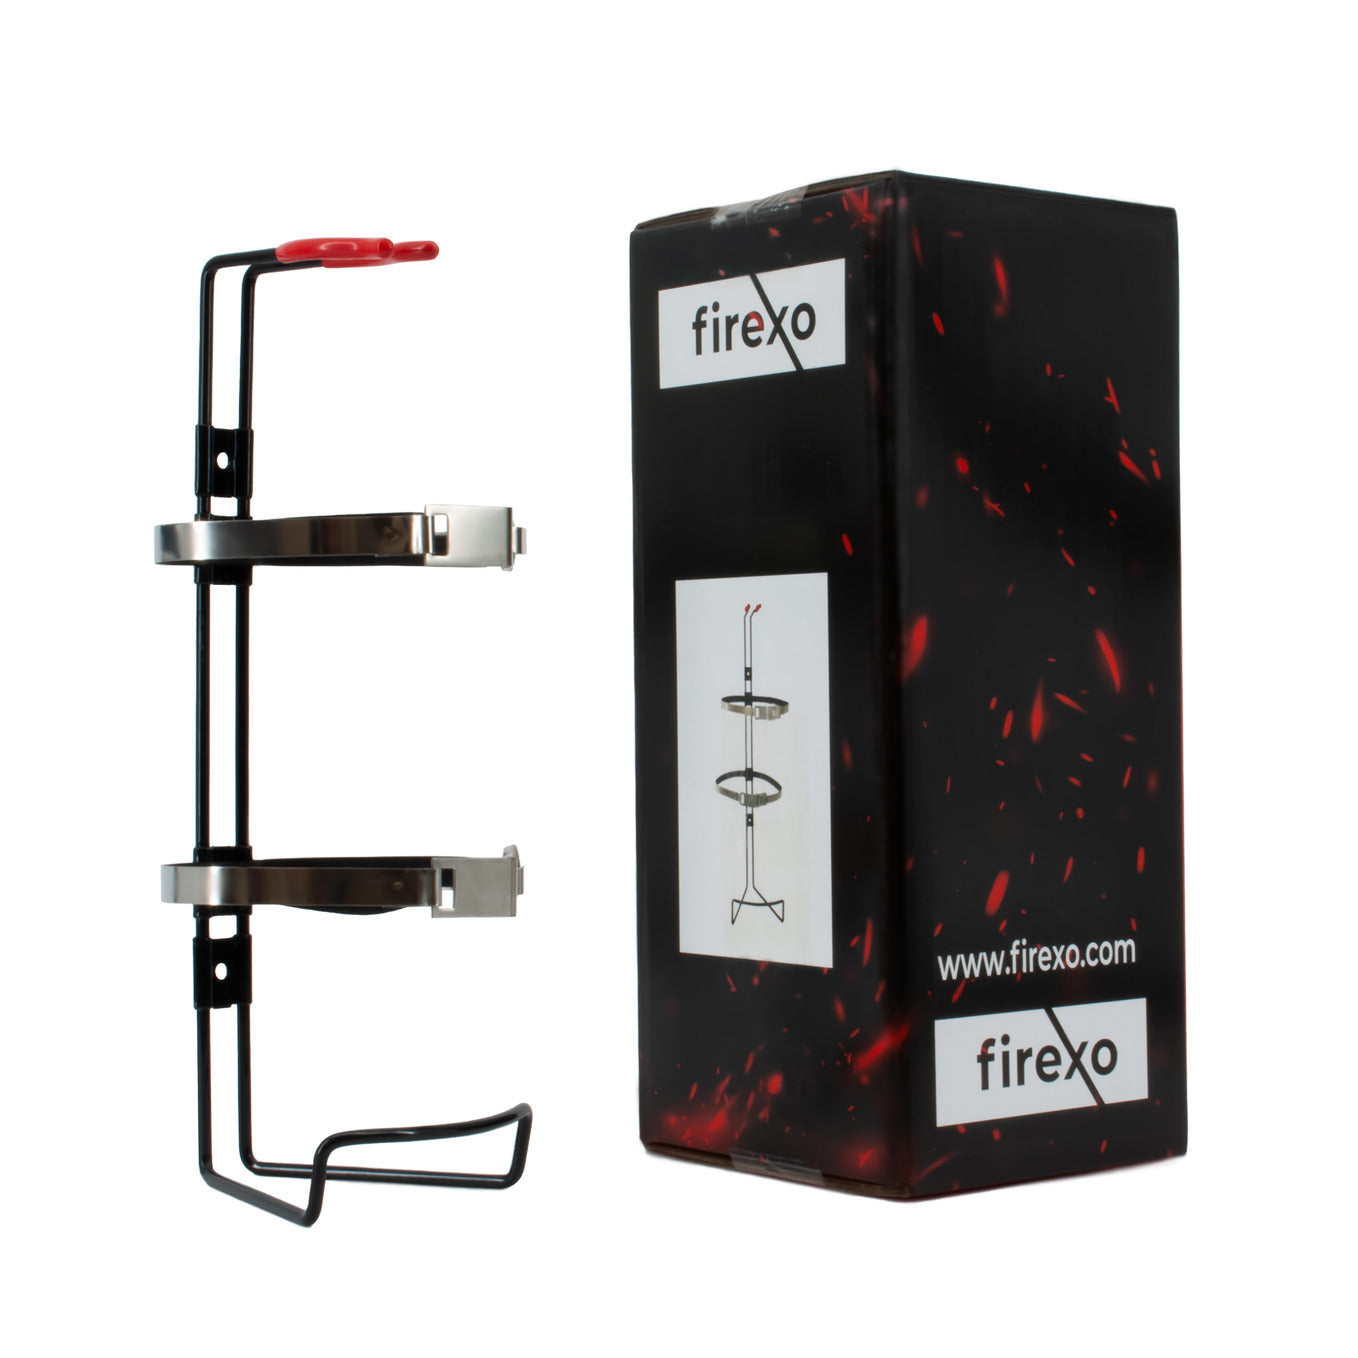 Firexo Bracket for 2L Fire Extinguisher